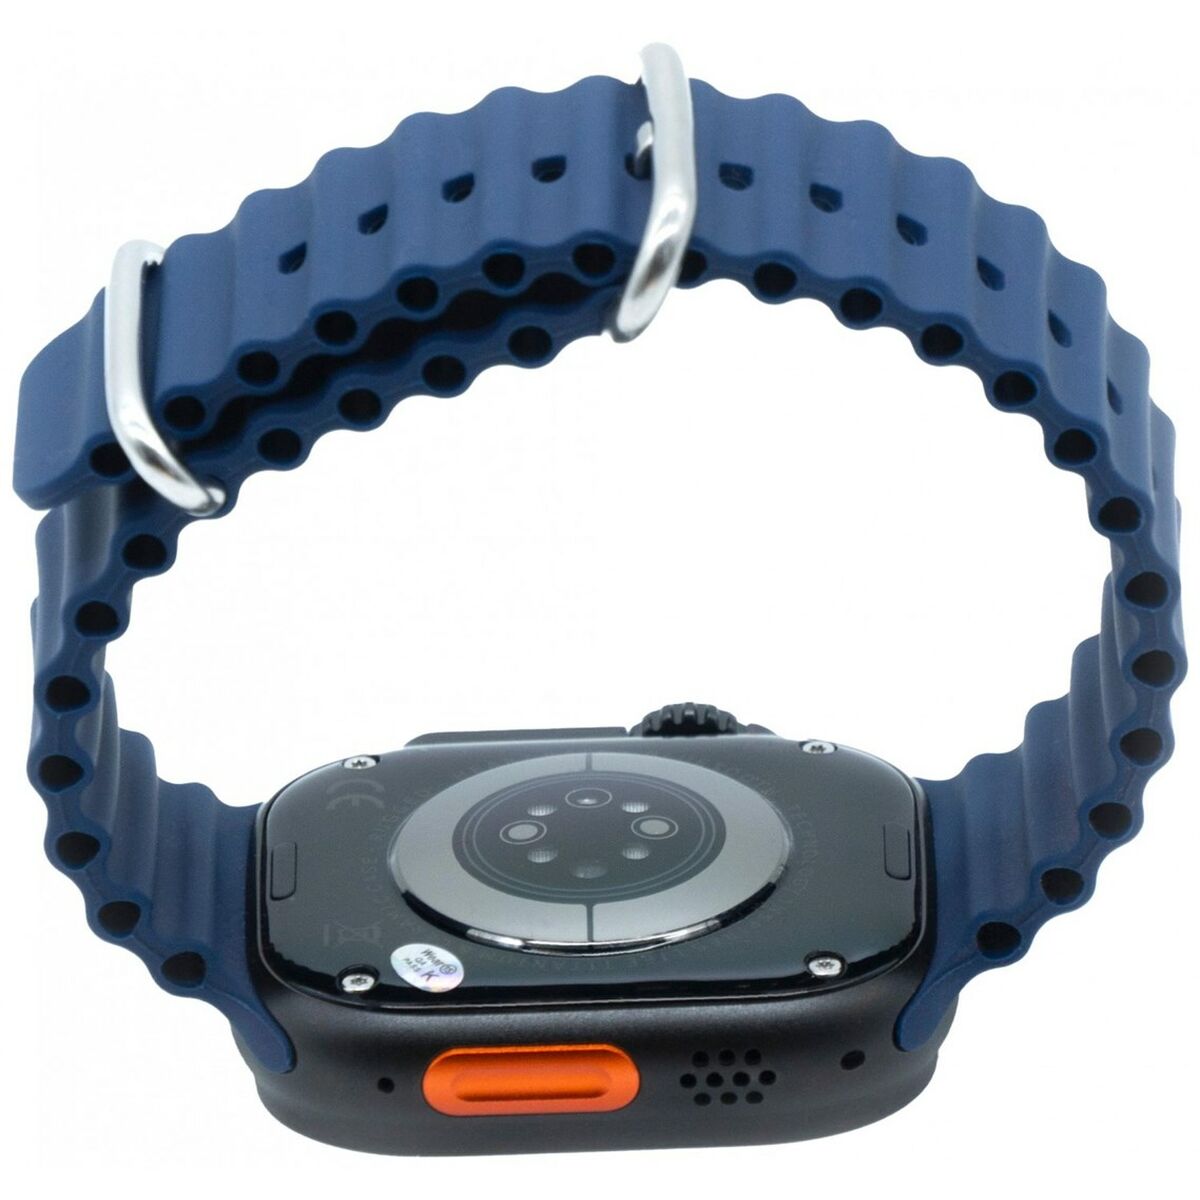 Smartwatch Kiano Solid Γκρι Μαύρο Μπλε